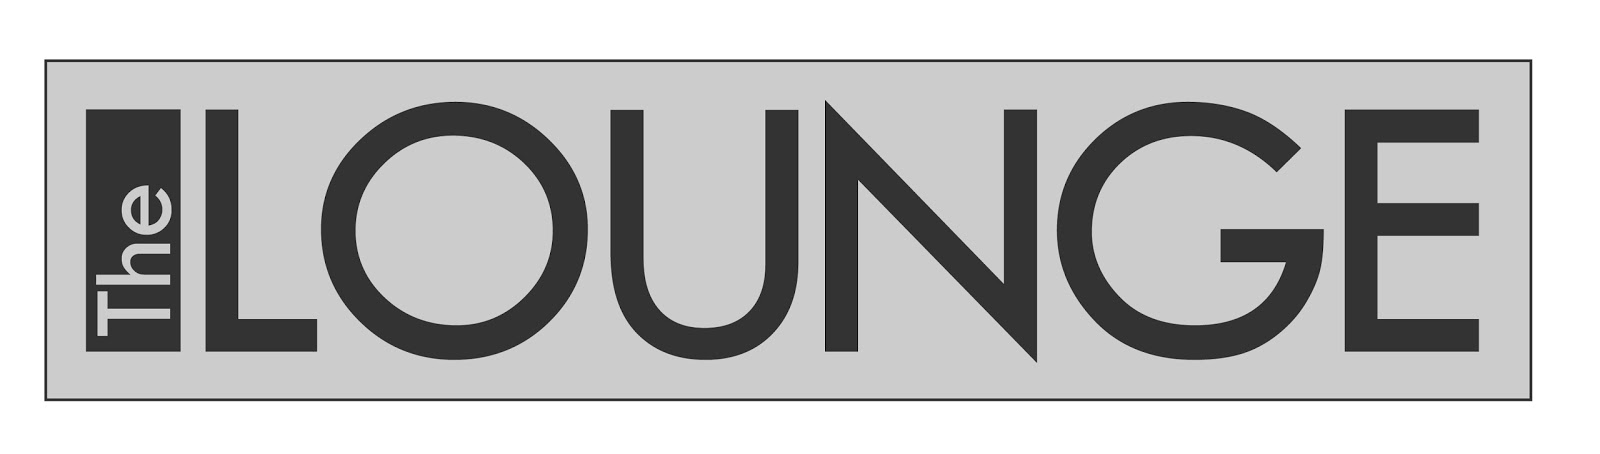 lounge logo ideas 3